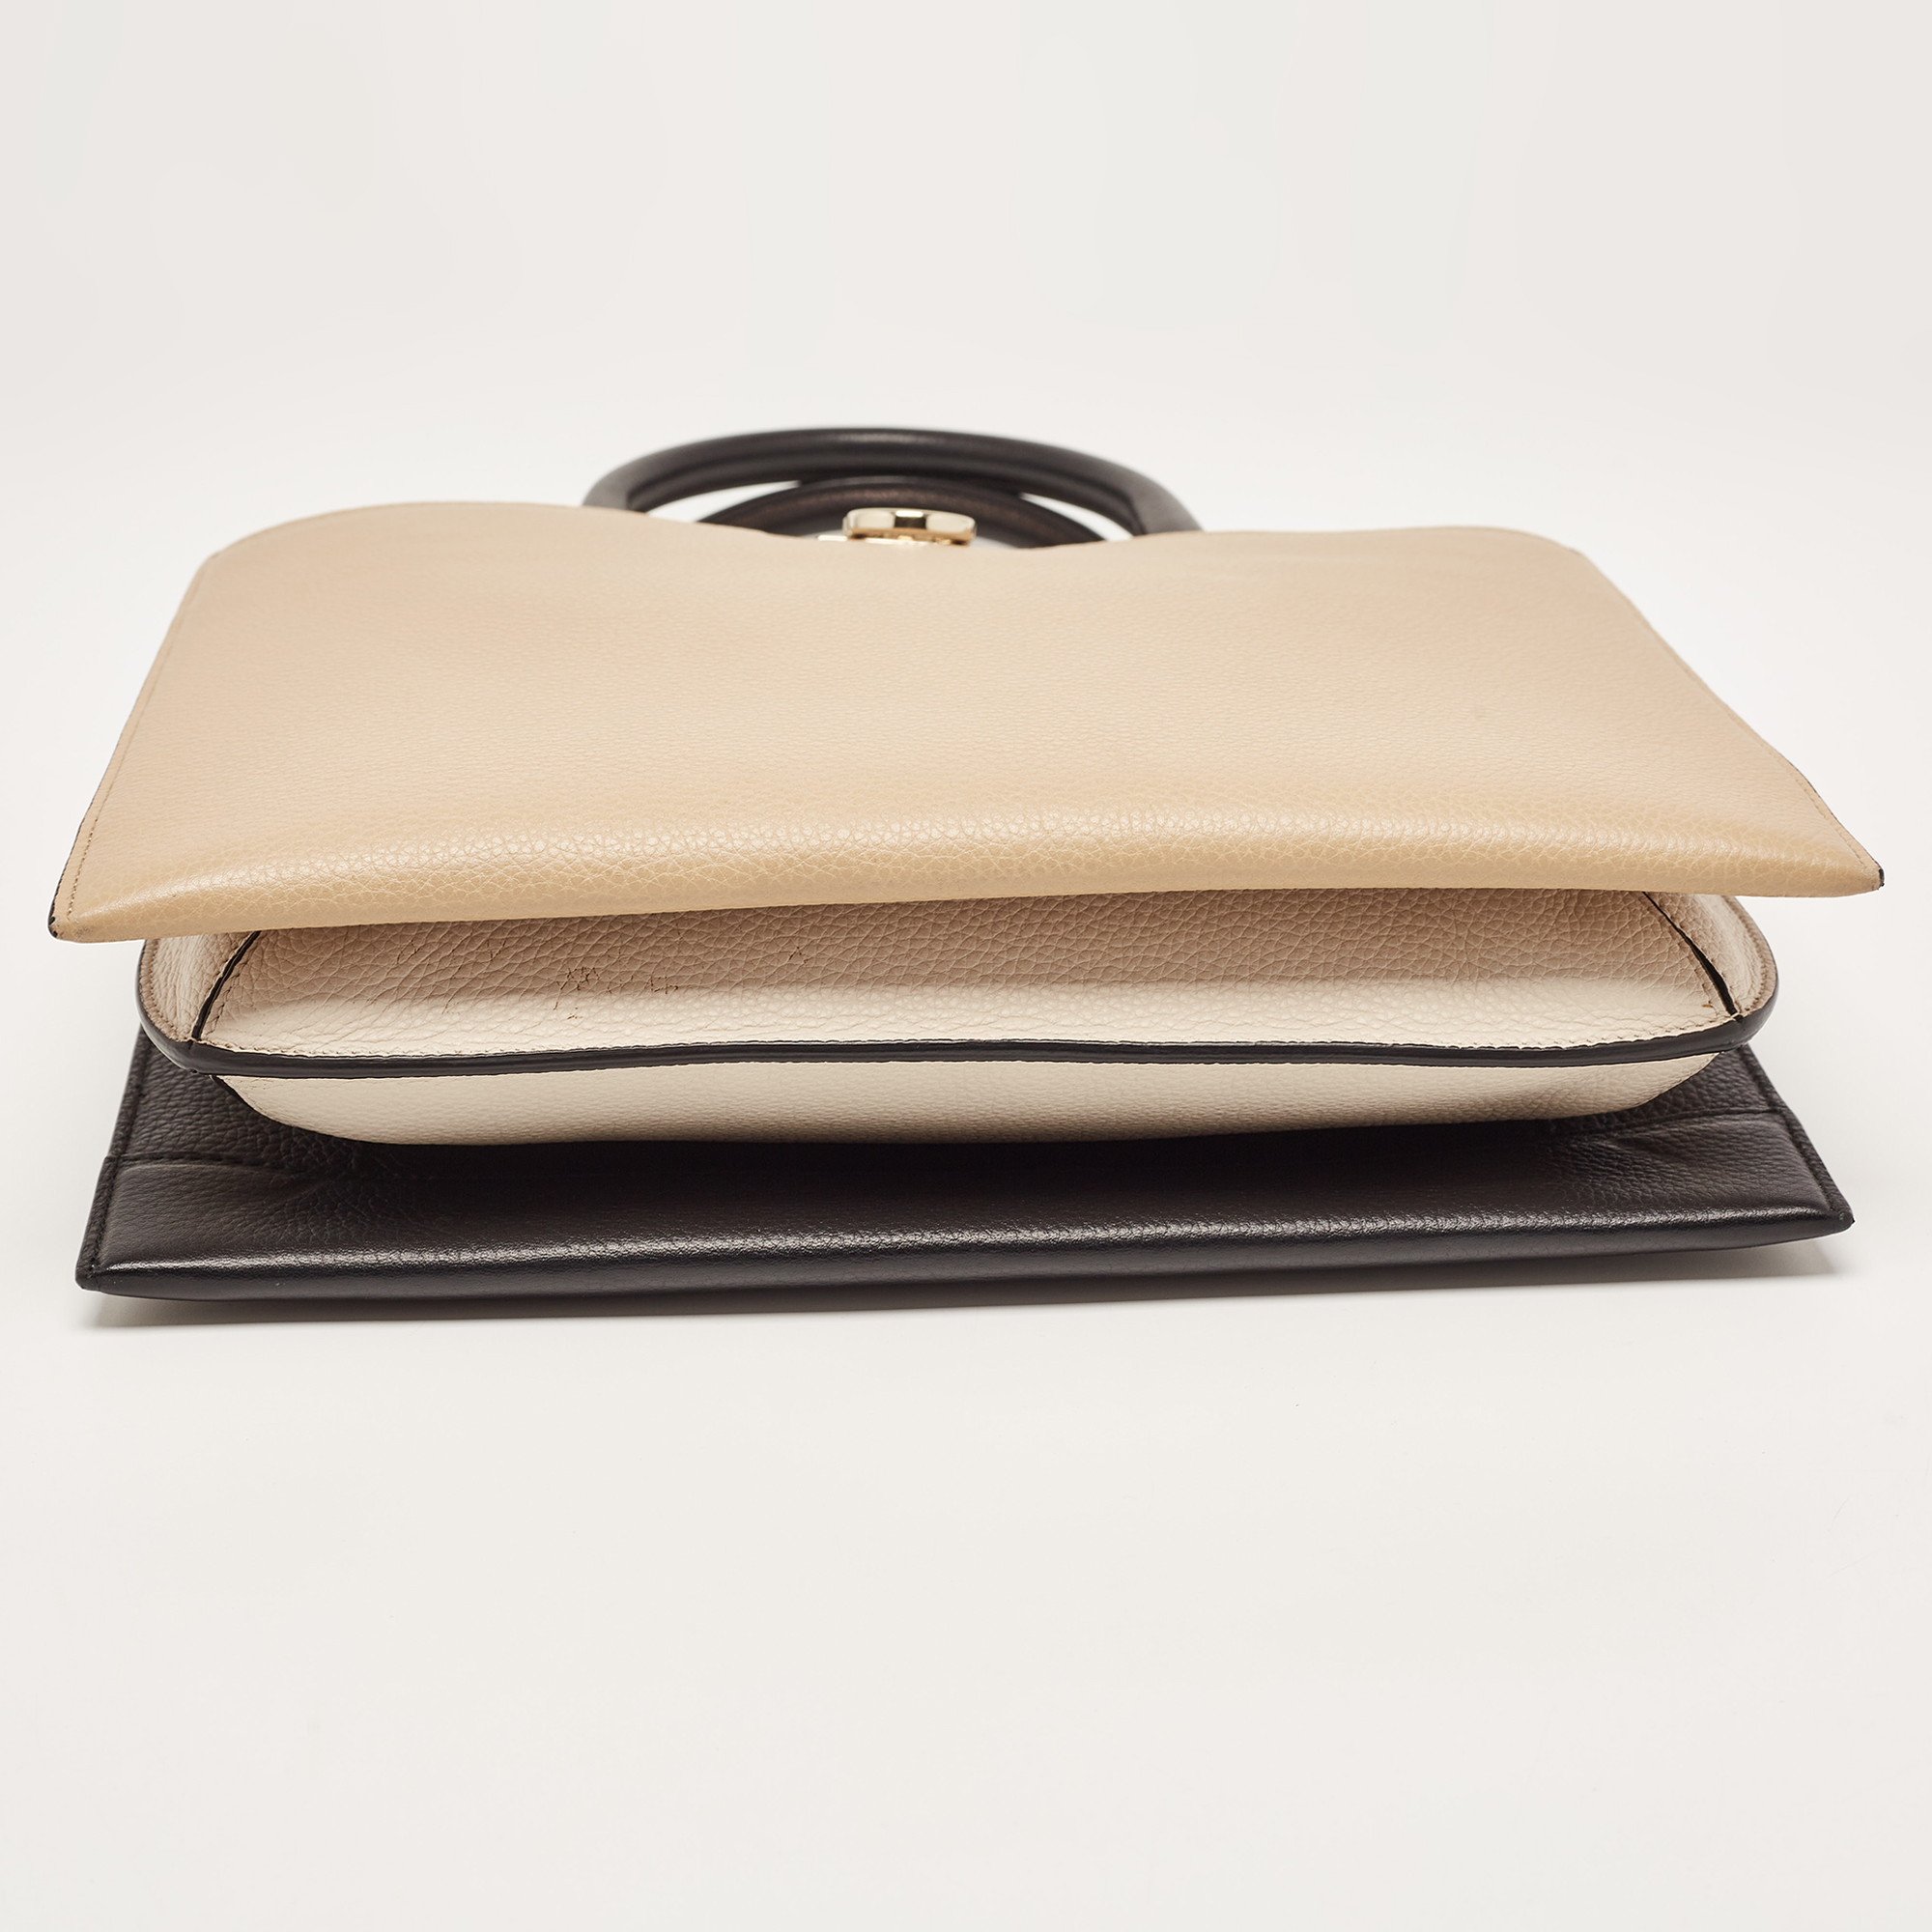 Salvatore Ferragamo Tricolor Leather Trifolio Top Handle Bag